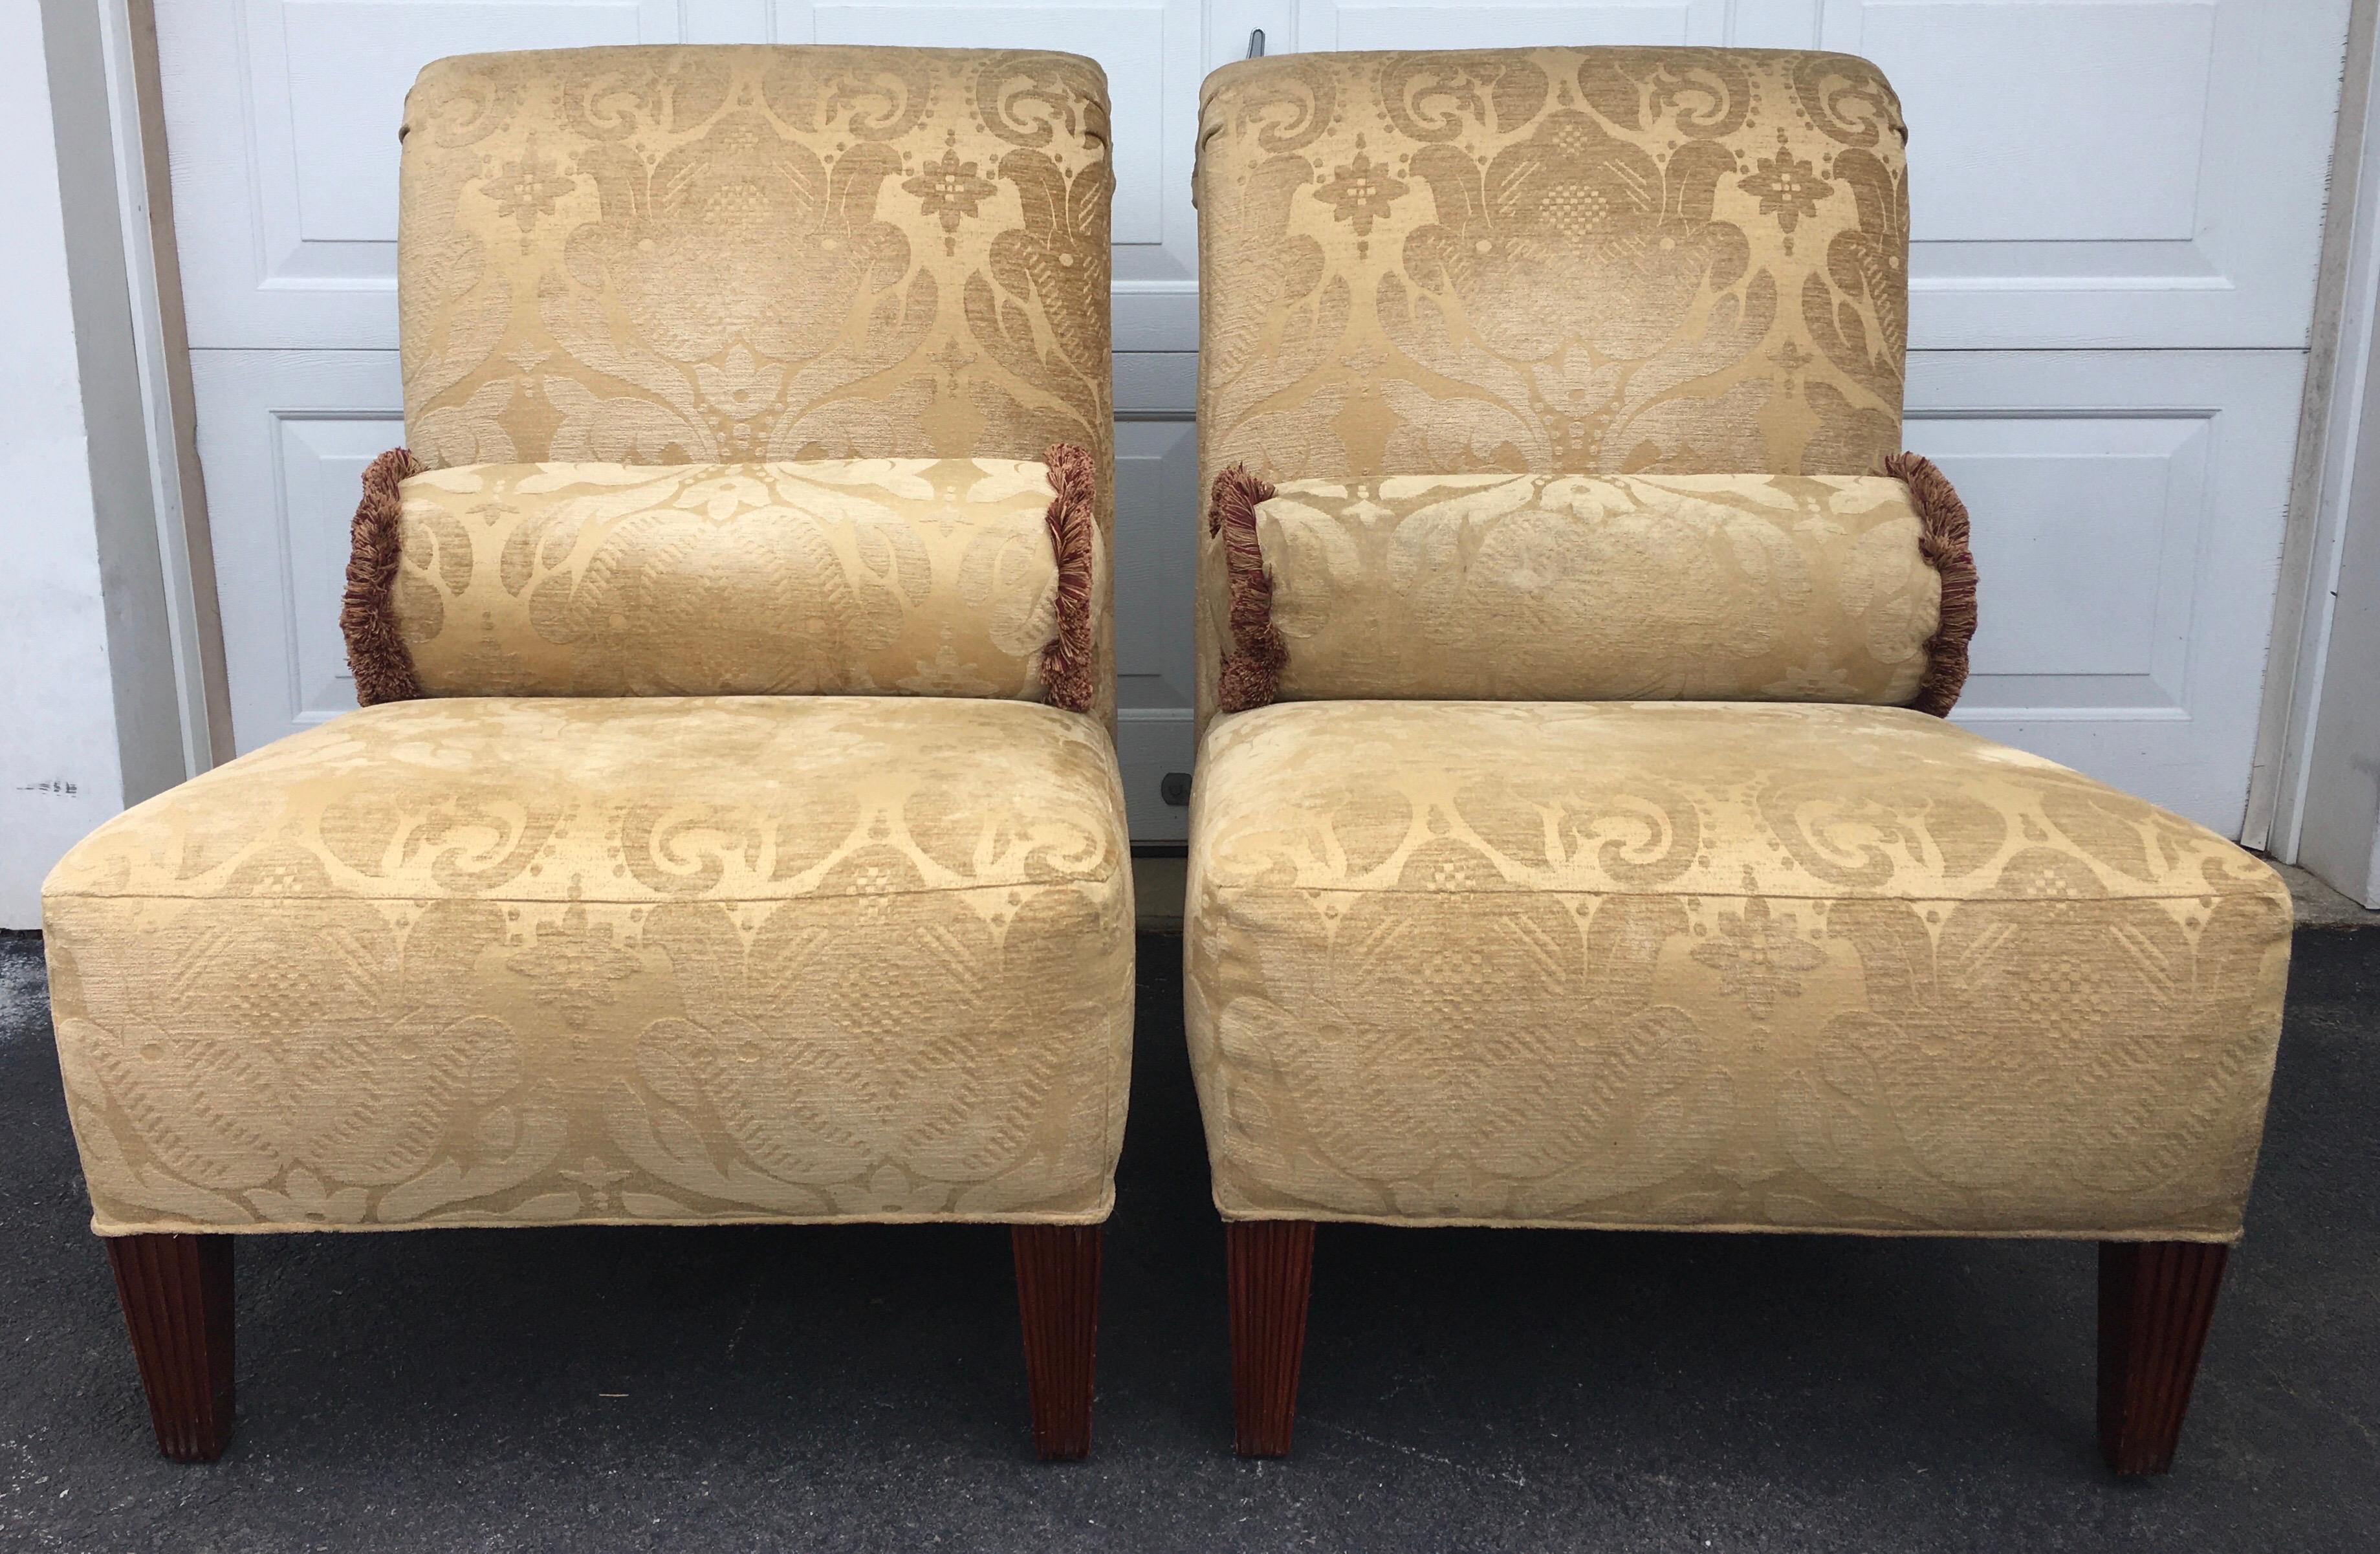 Upholstery Barbara Barry for Baker Furniture Damask Slipper Chairs, Pair